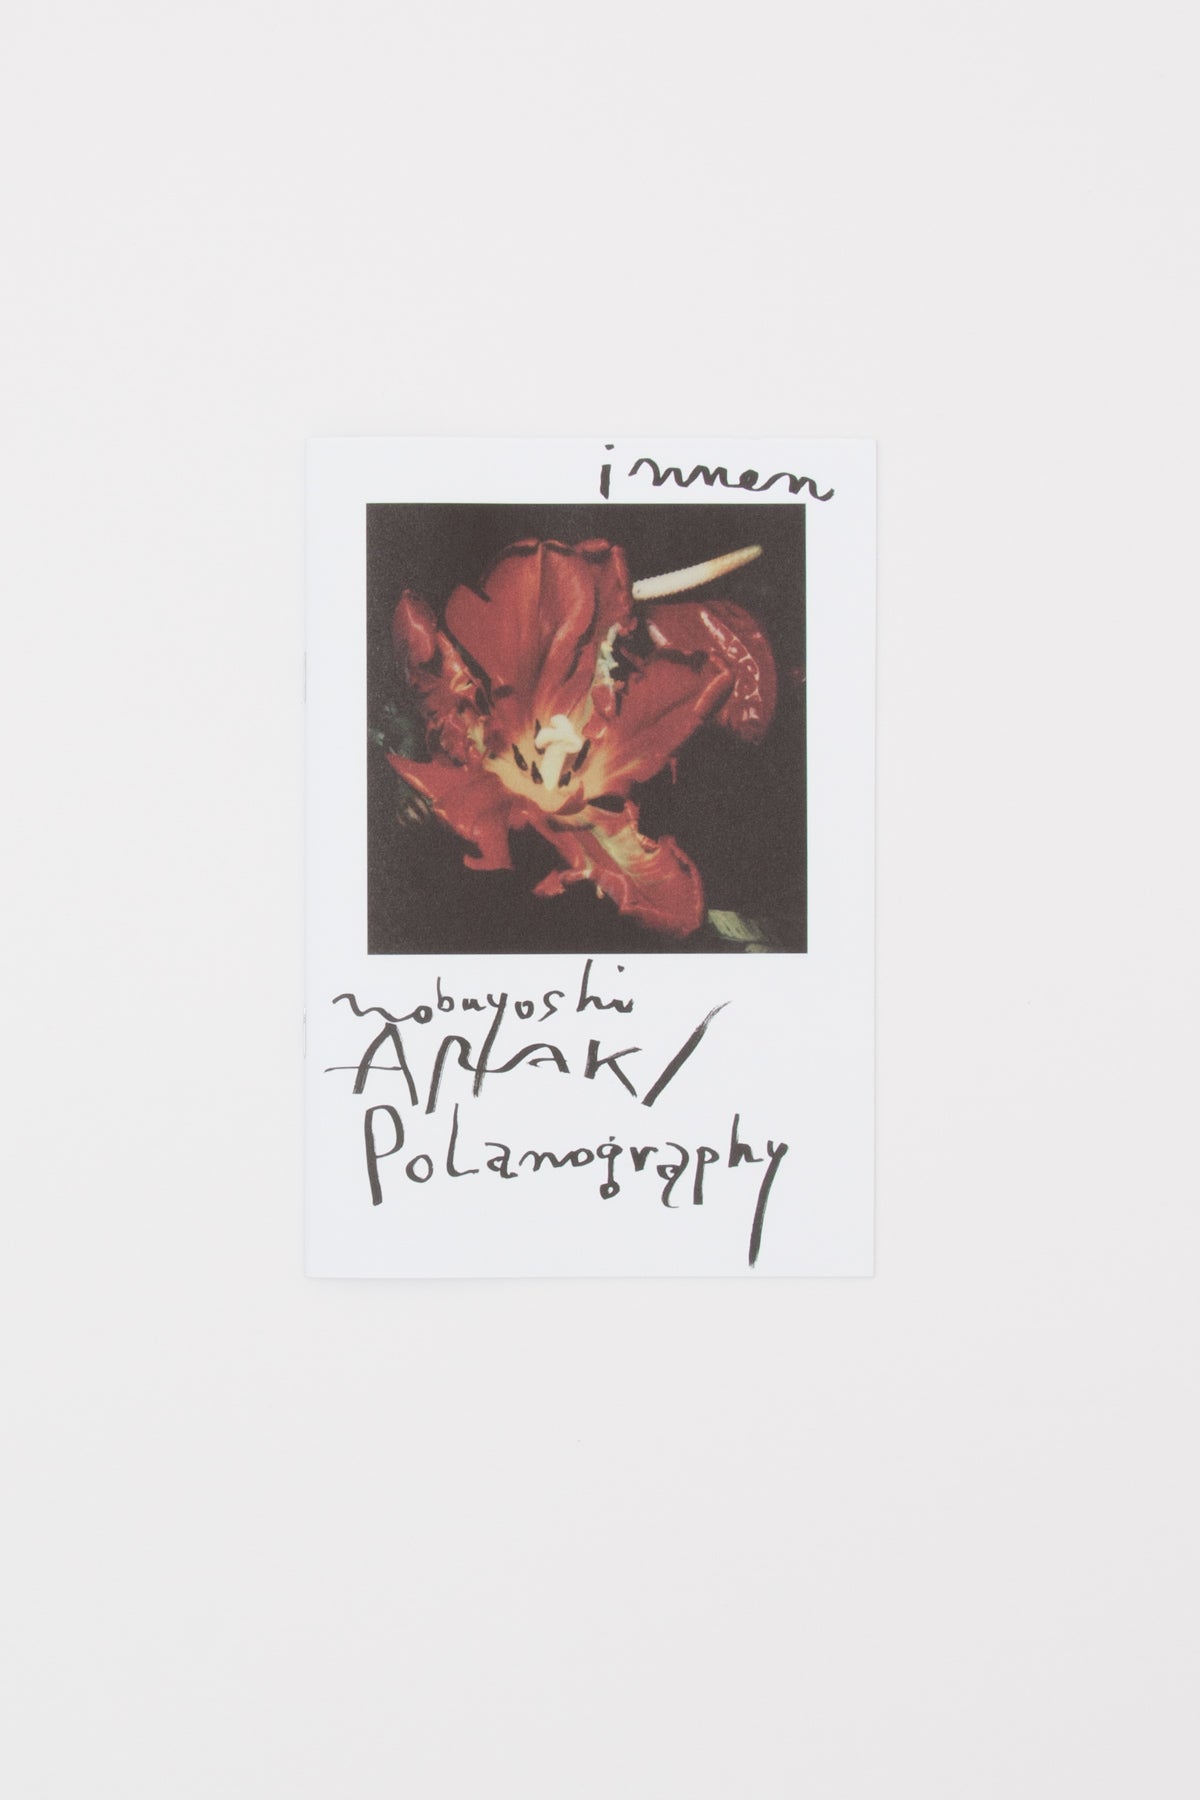 Polanography - Nobuyoshi Araki